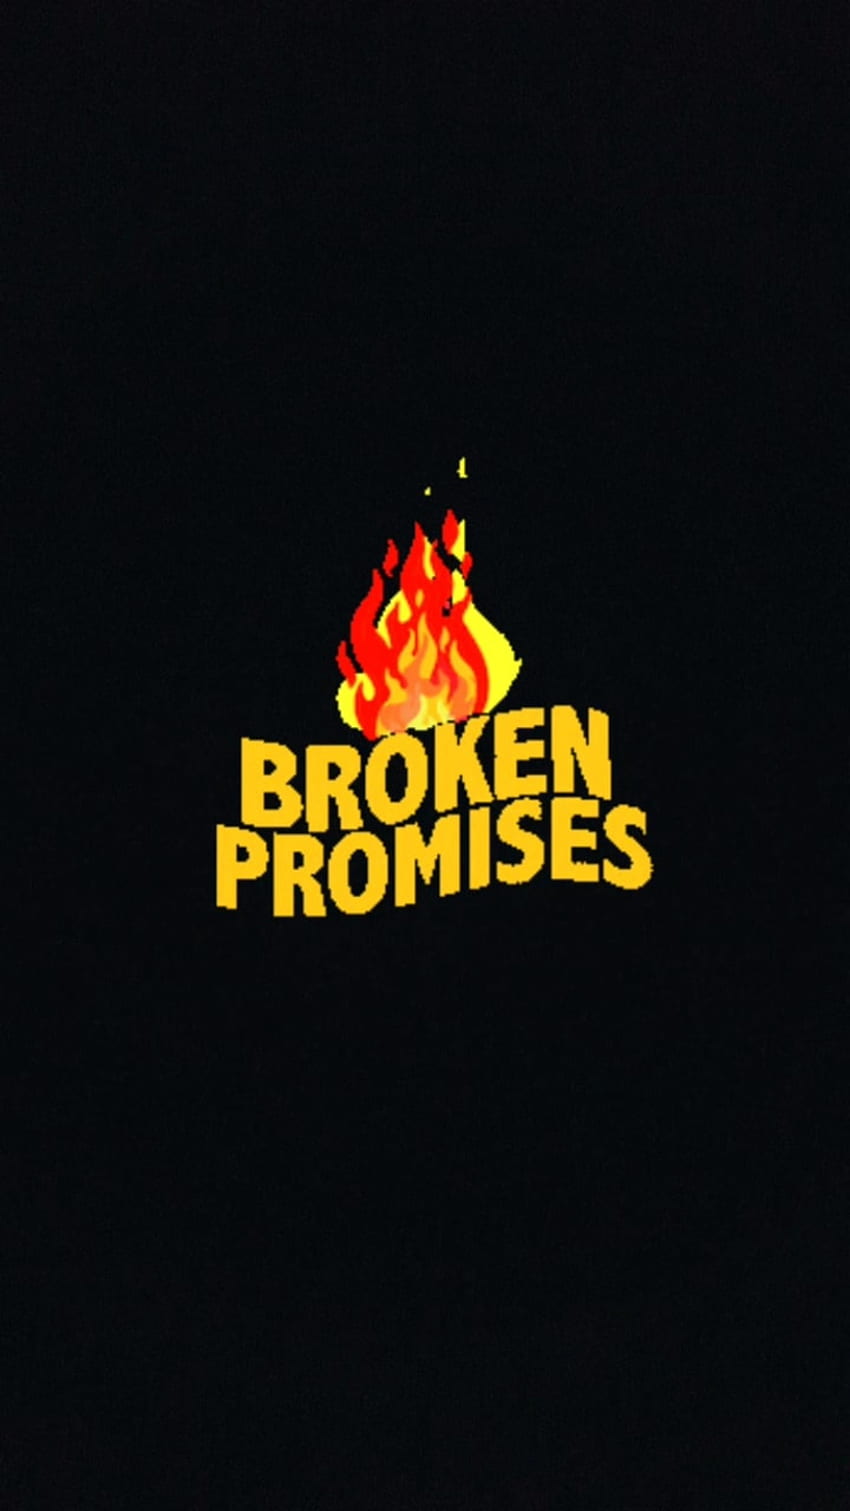 Broken Promises Slogan Double Rose Chain Stock Vector Royalty Free  1347233543  Shutterstock